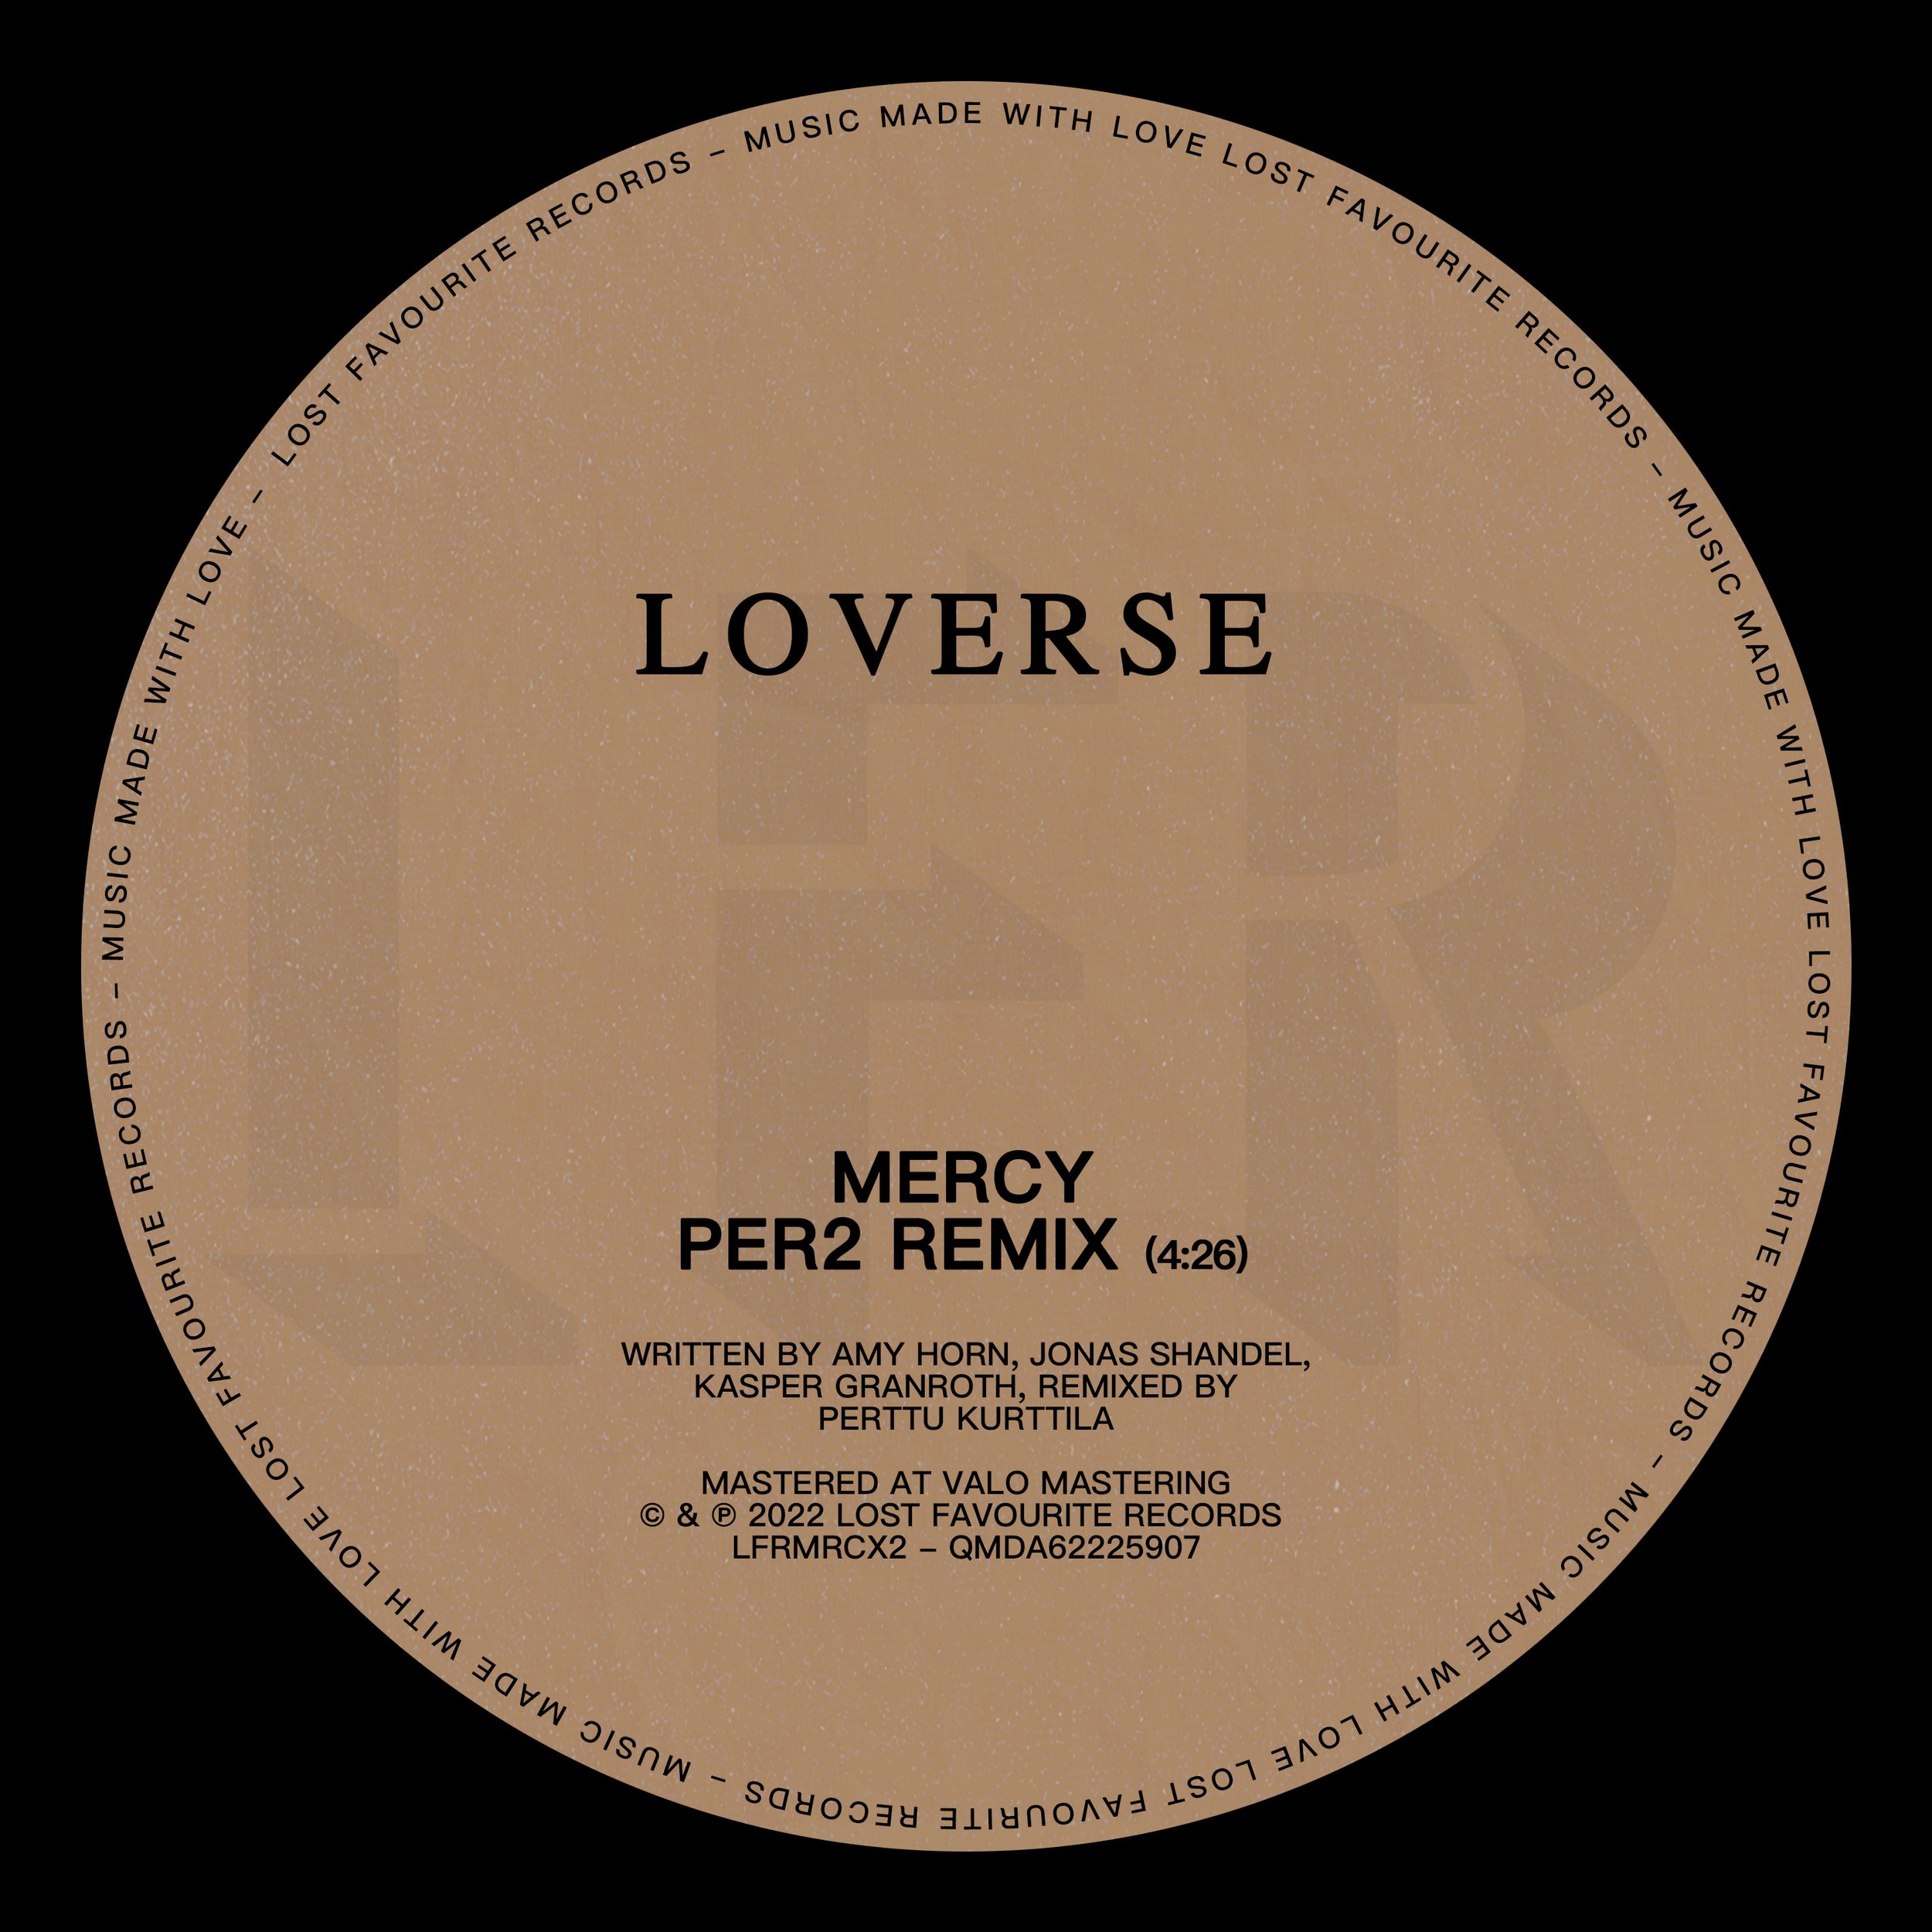  Loverse - Mercy (Per2 Remix) 